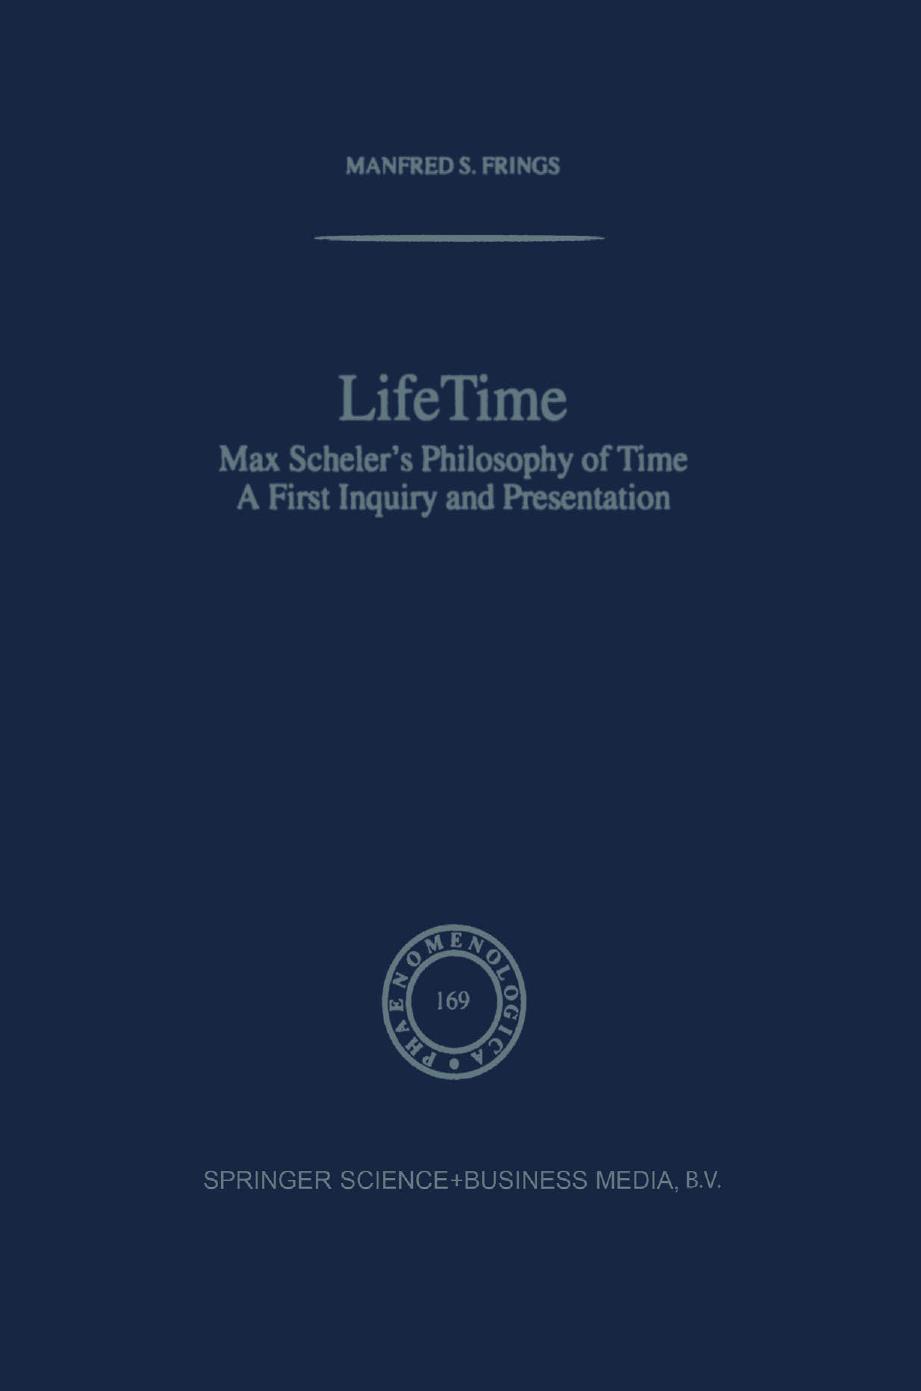 Lifetime: Max Scheler’s Philosophy of Time